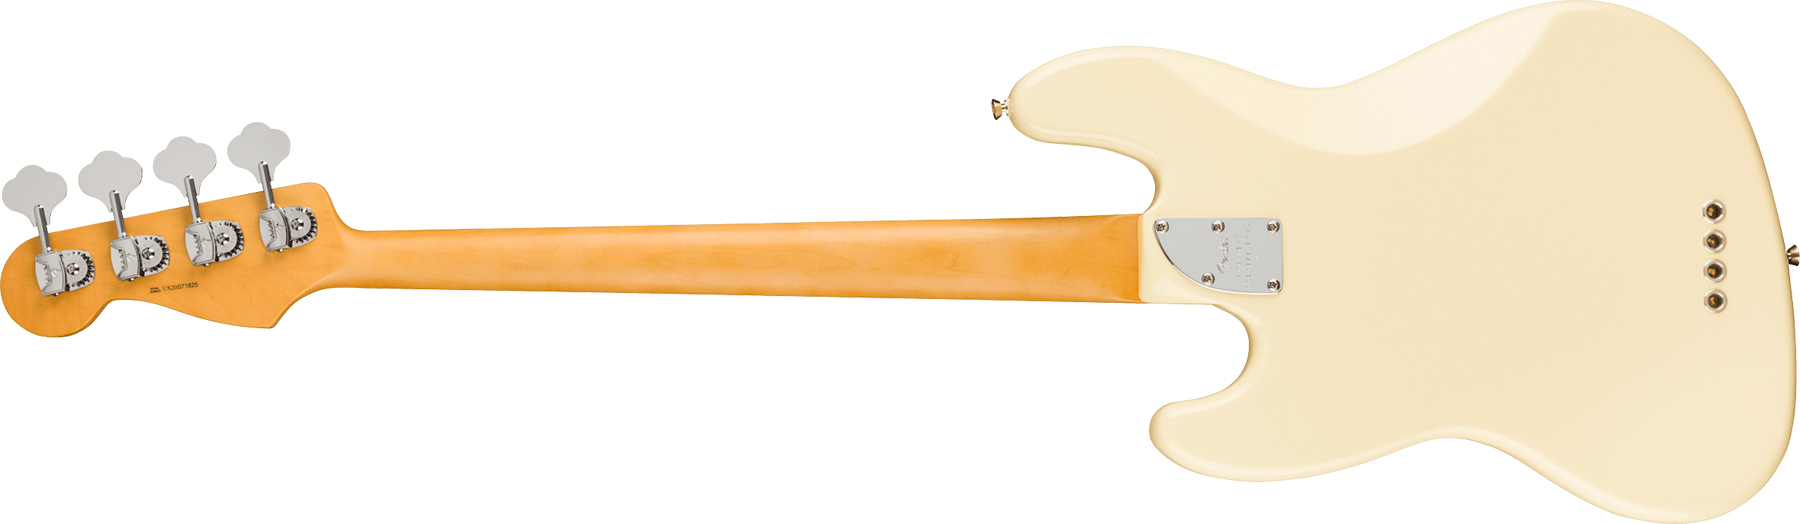 Fender Jazz Bass American Professional Ii Usa Mn - Olympic White - Solid body elektrische bas - Variation 2